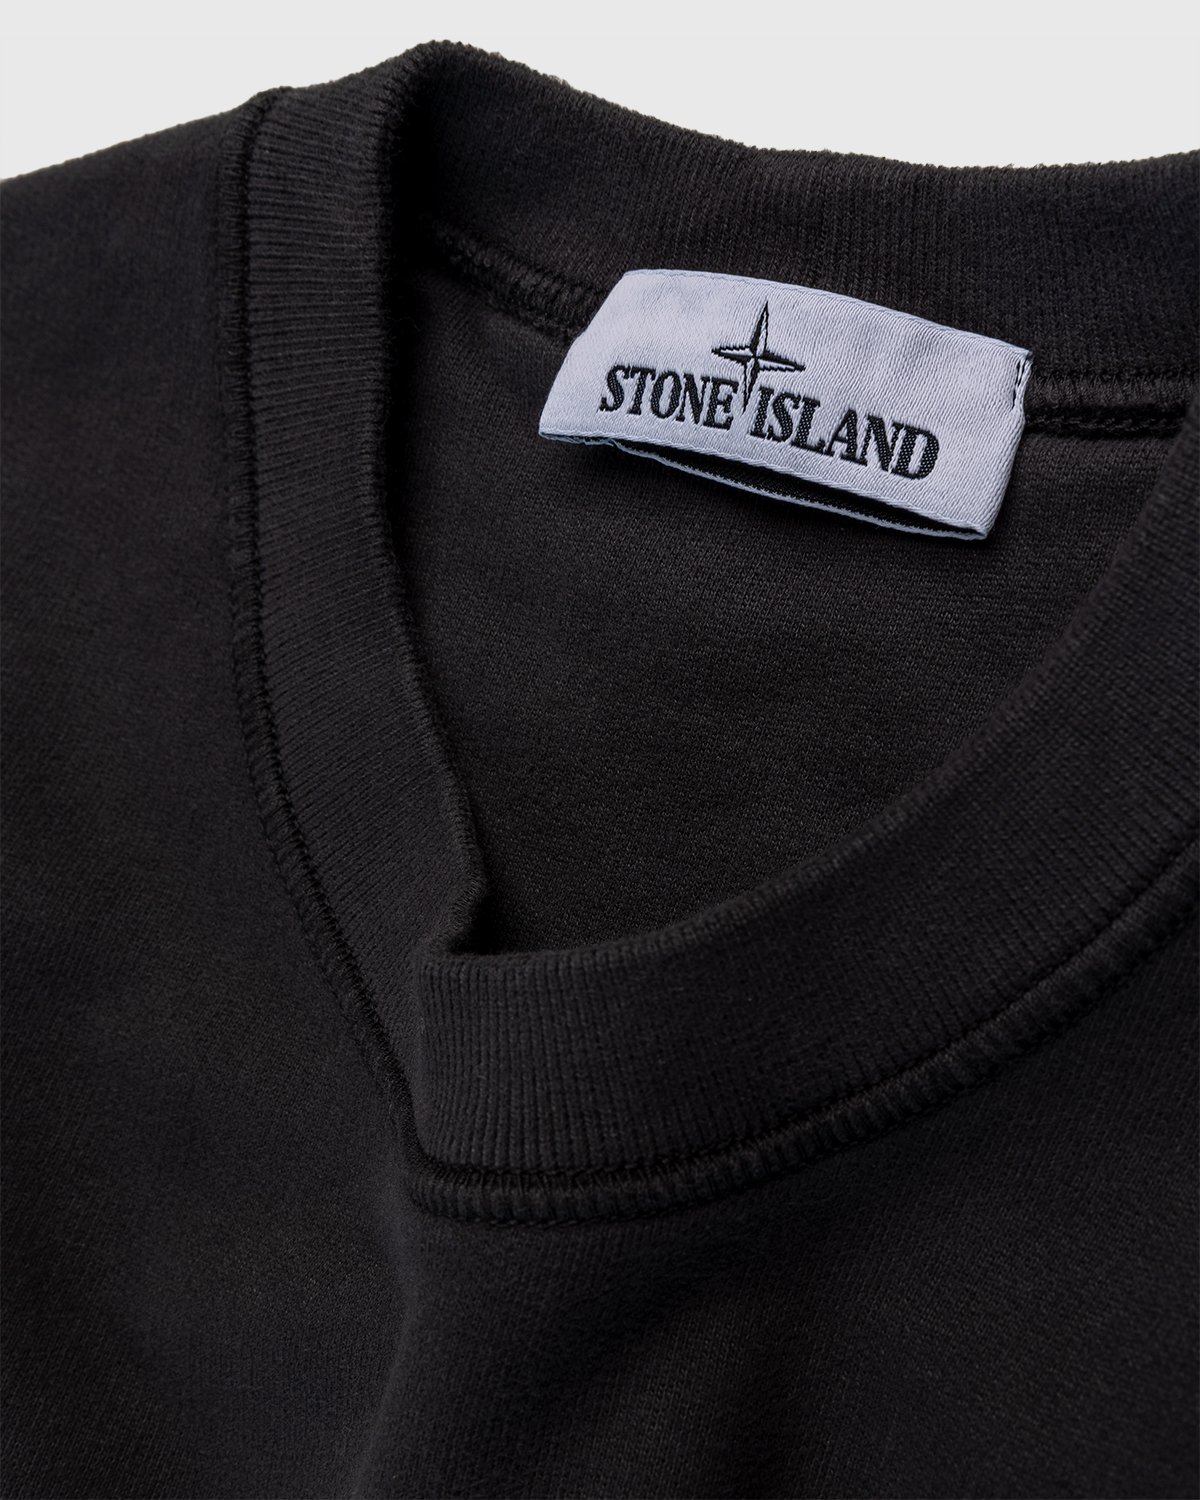 Stone Island - Geelong Wool Crewneck Charcoal - Clothing - Grey - Image 3